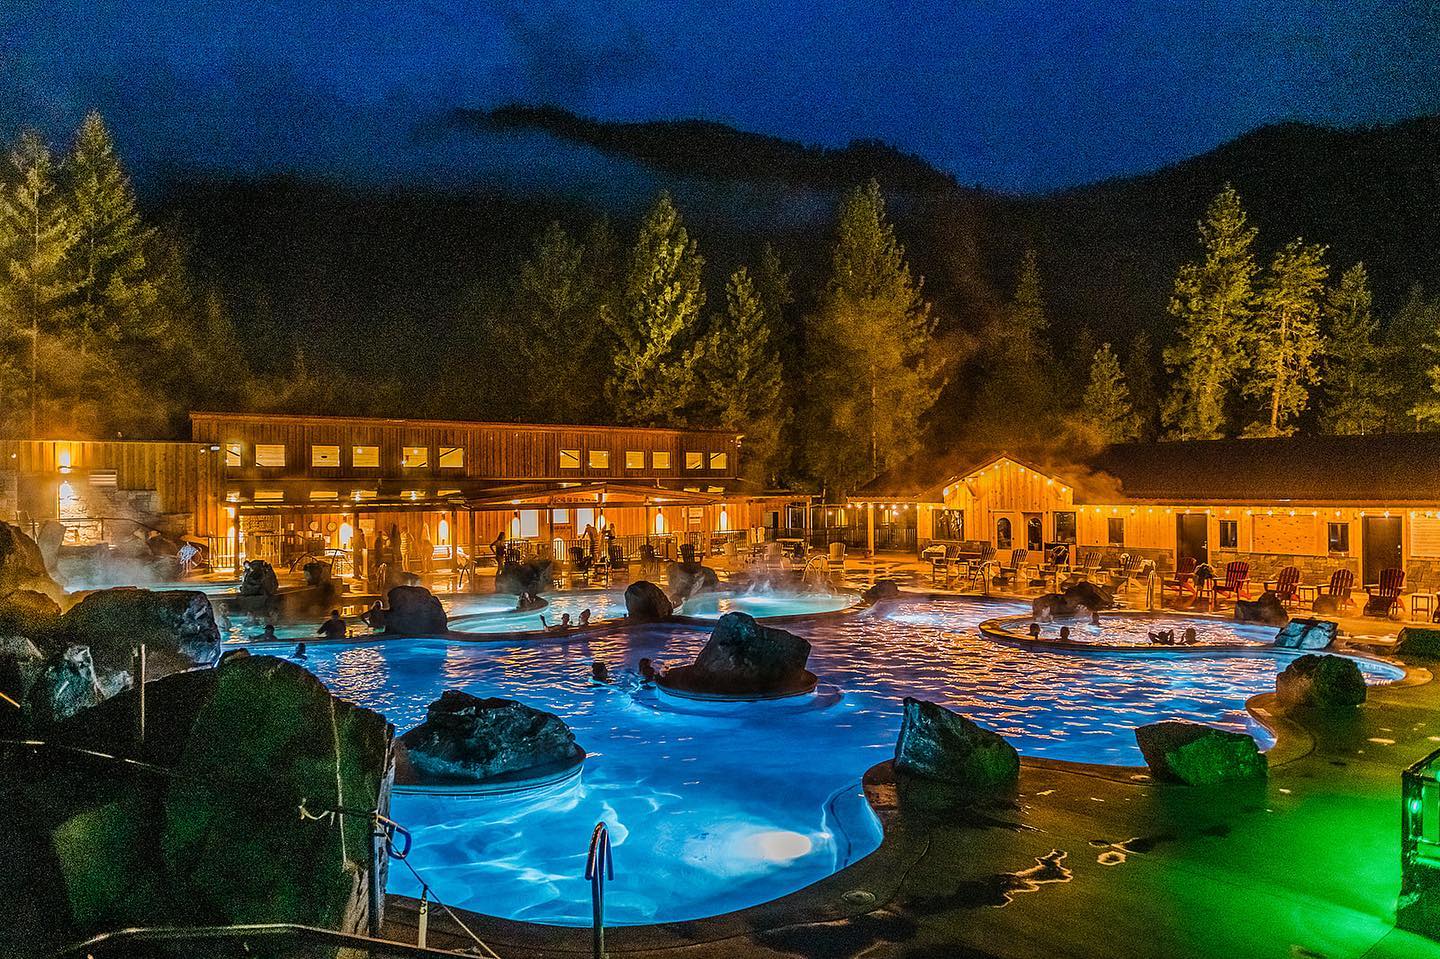 Quinn's Hot Springs Pool at Night